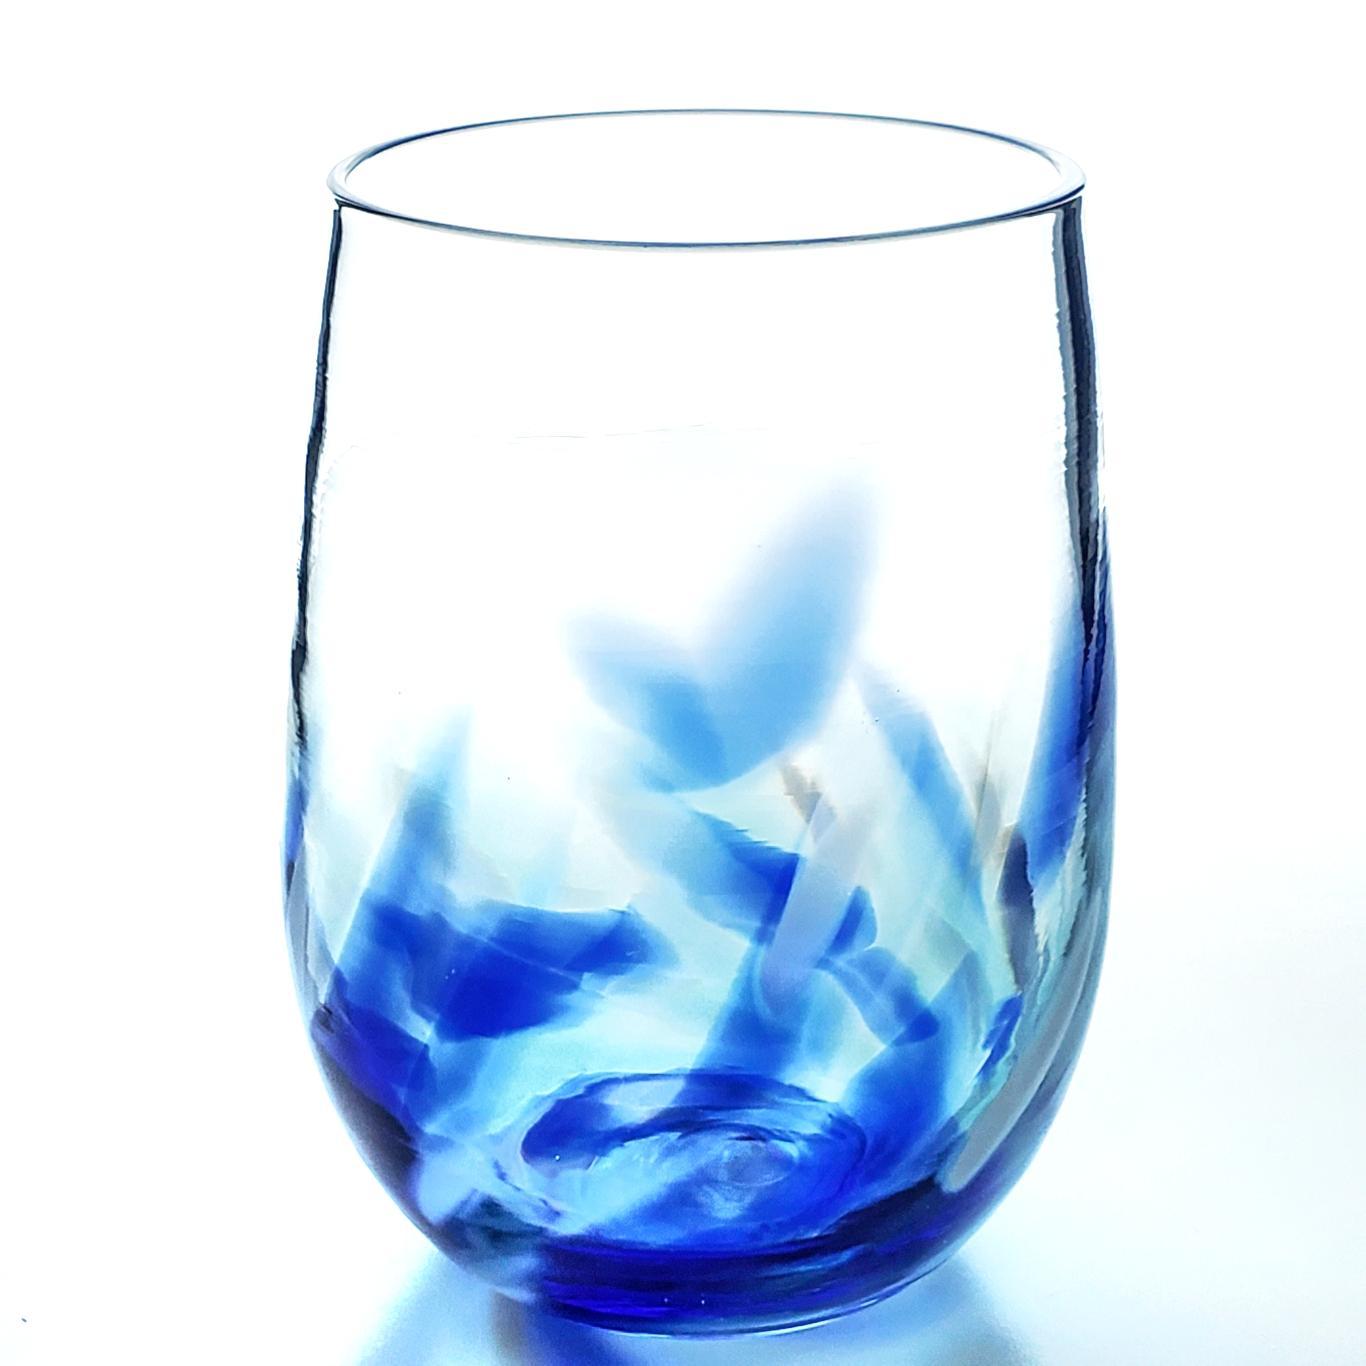 1922 Small Stemless Wine Glass - Ice Blue